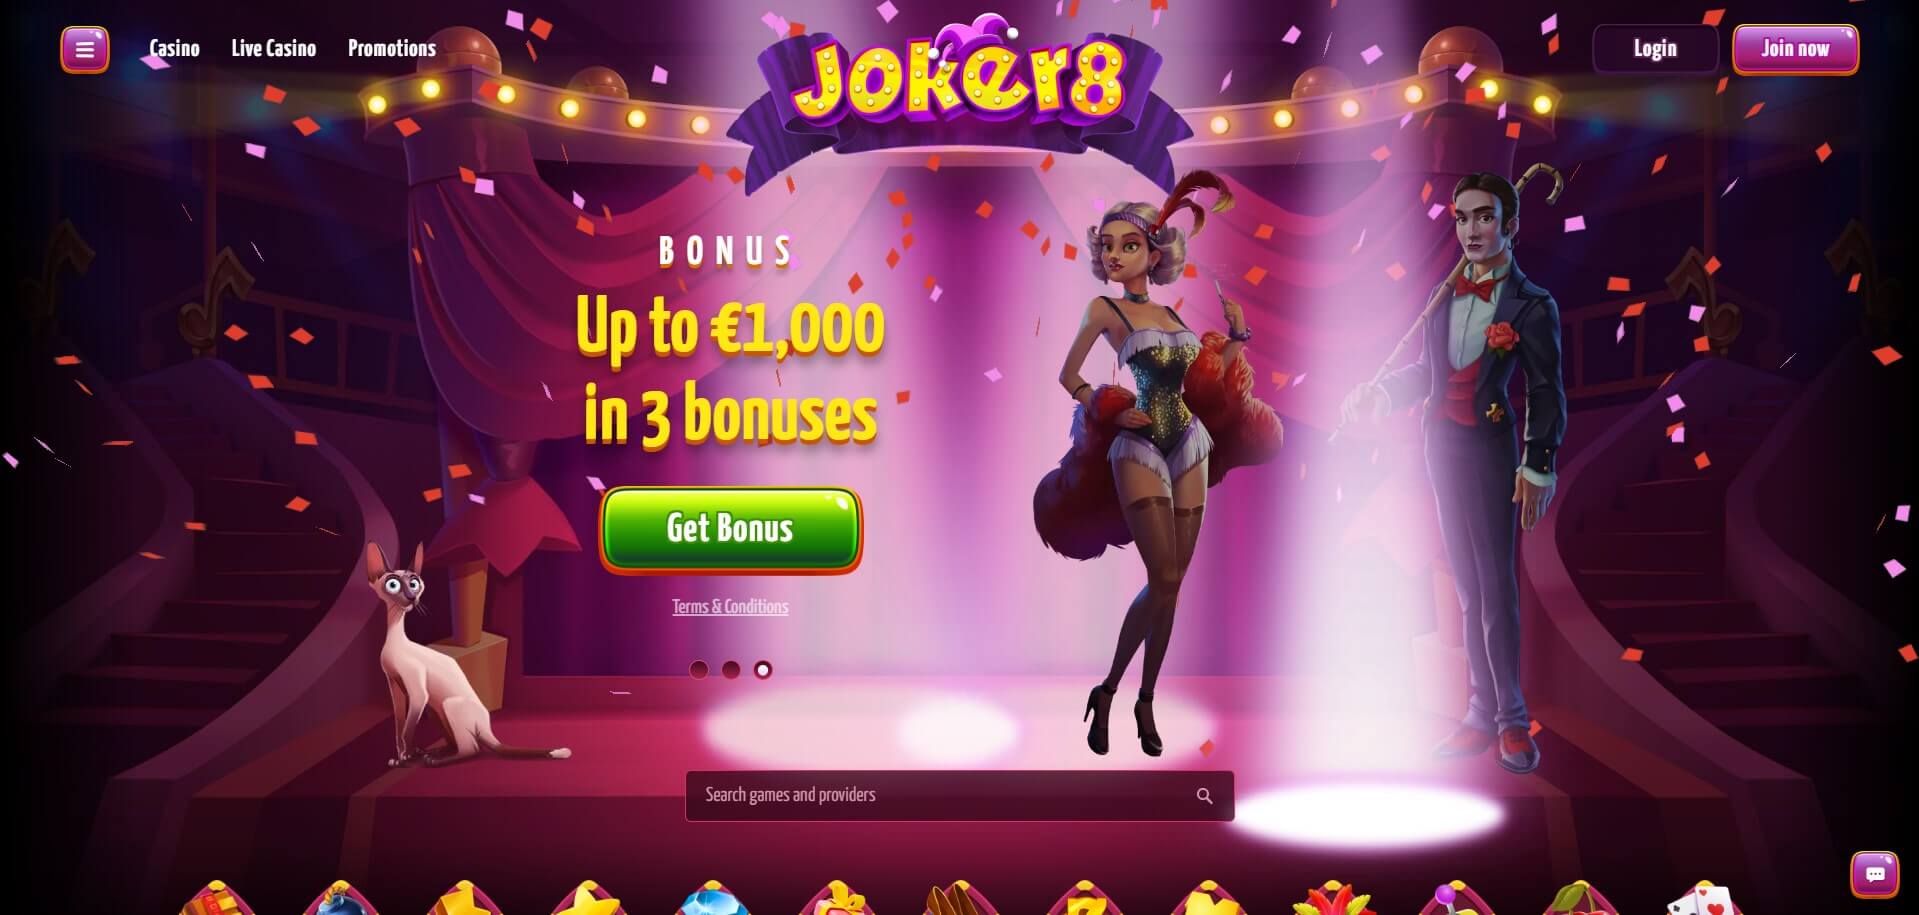 Joker8 Casino Review